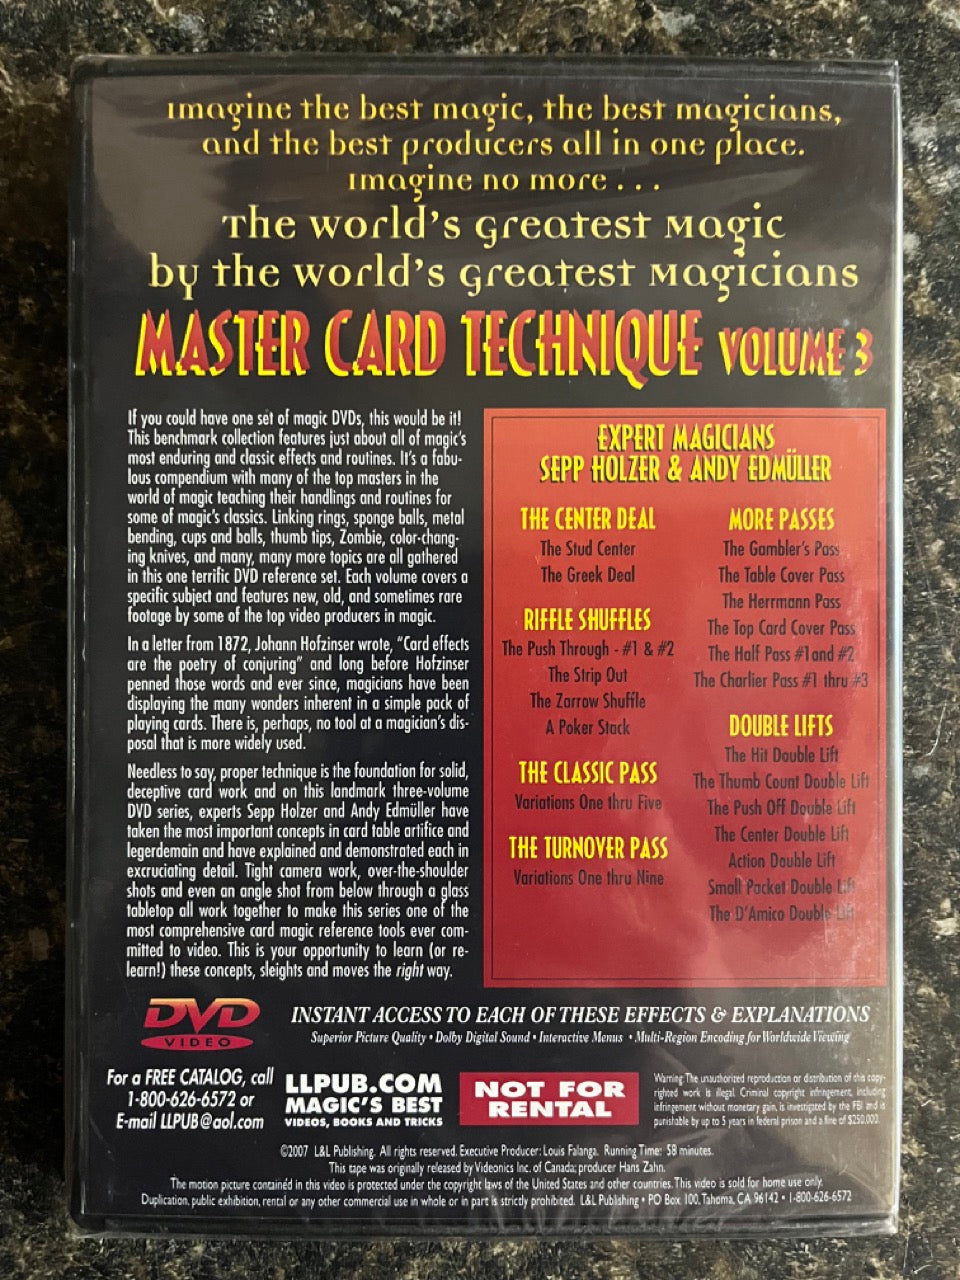 TWGM: The Secrets of Master Card Technique, Vol.3 - DVD